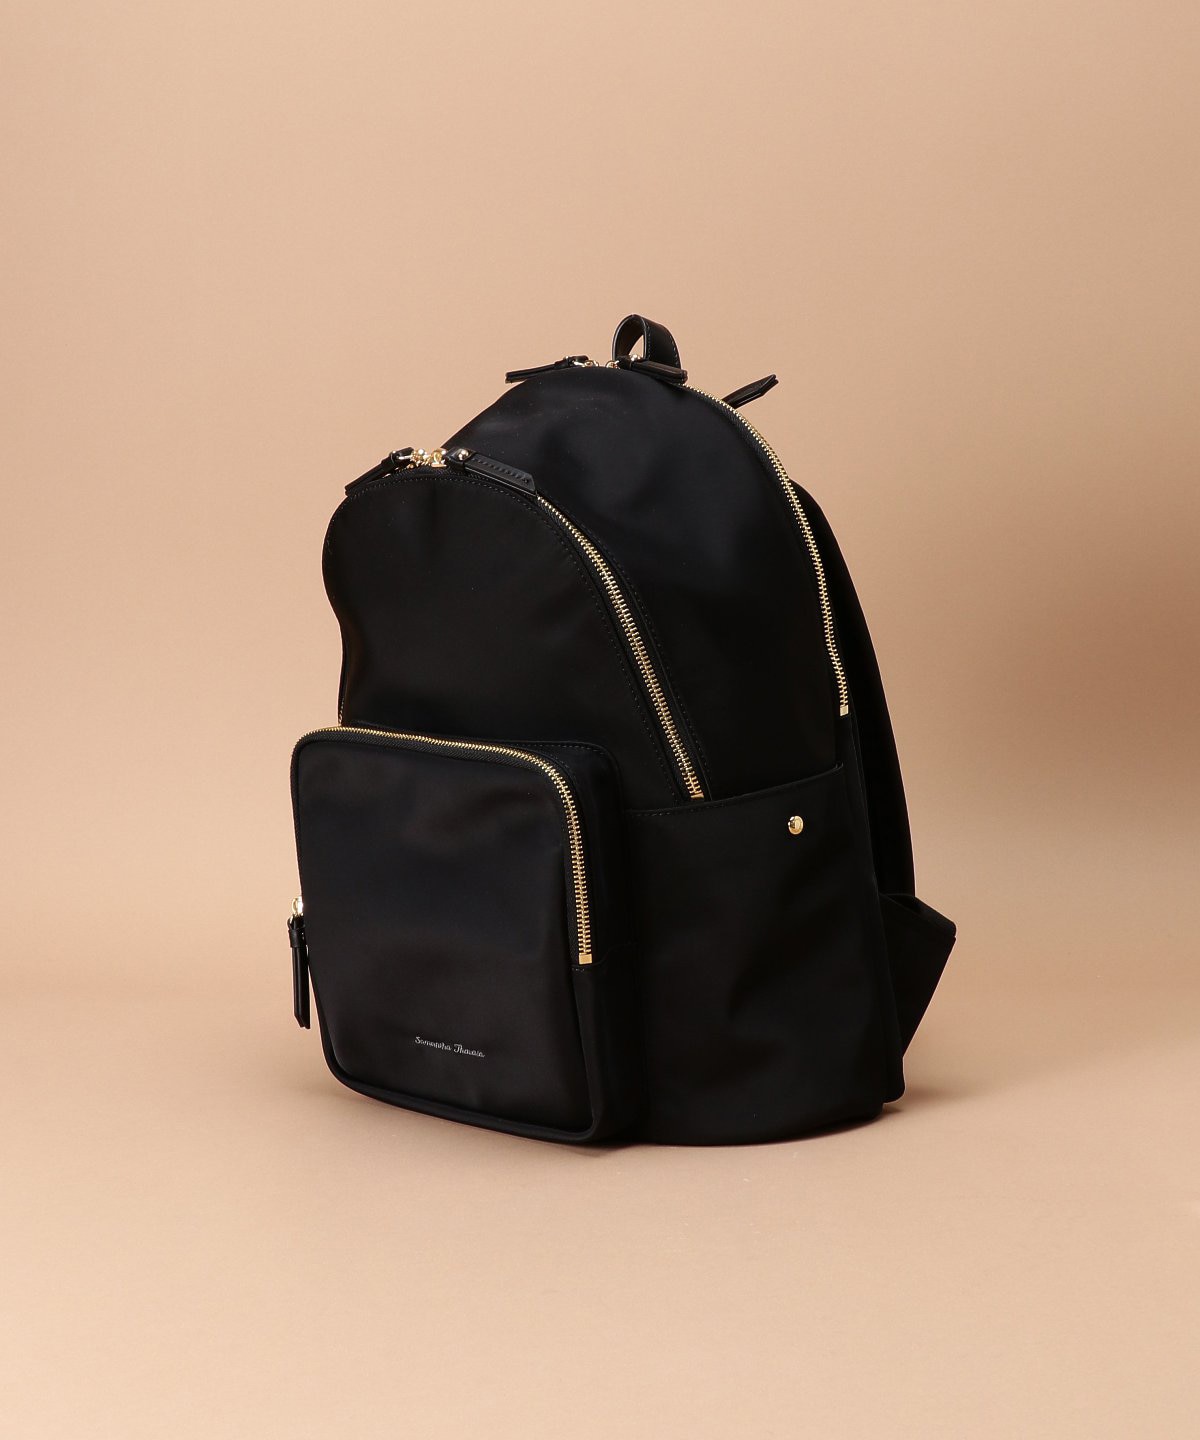 Dream bag for スタッズリュック(FREE ブラック): Samantha Thavasa